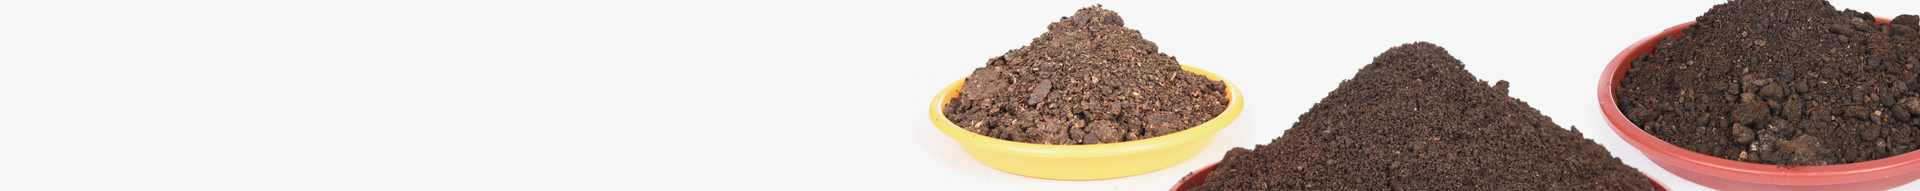 Potting Mix Soil for Home & Garden Plants